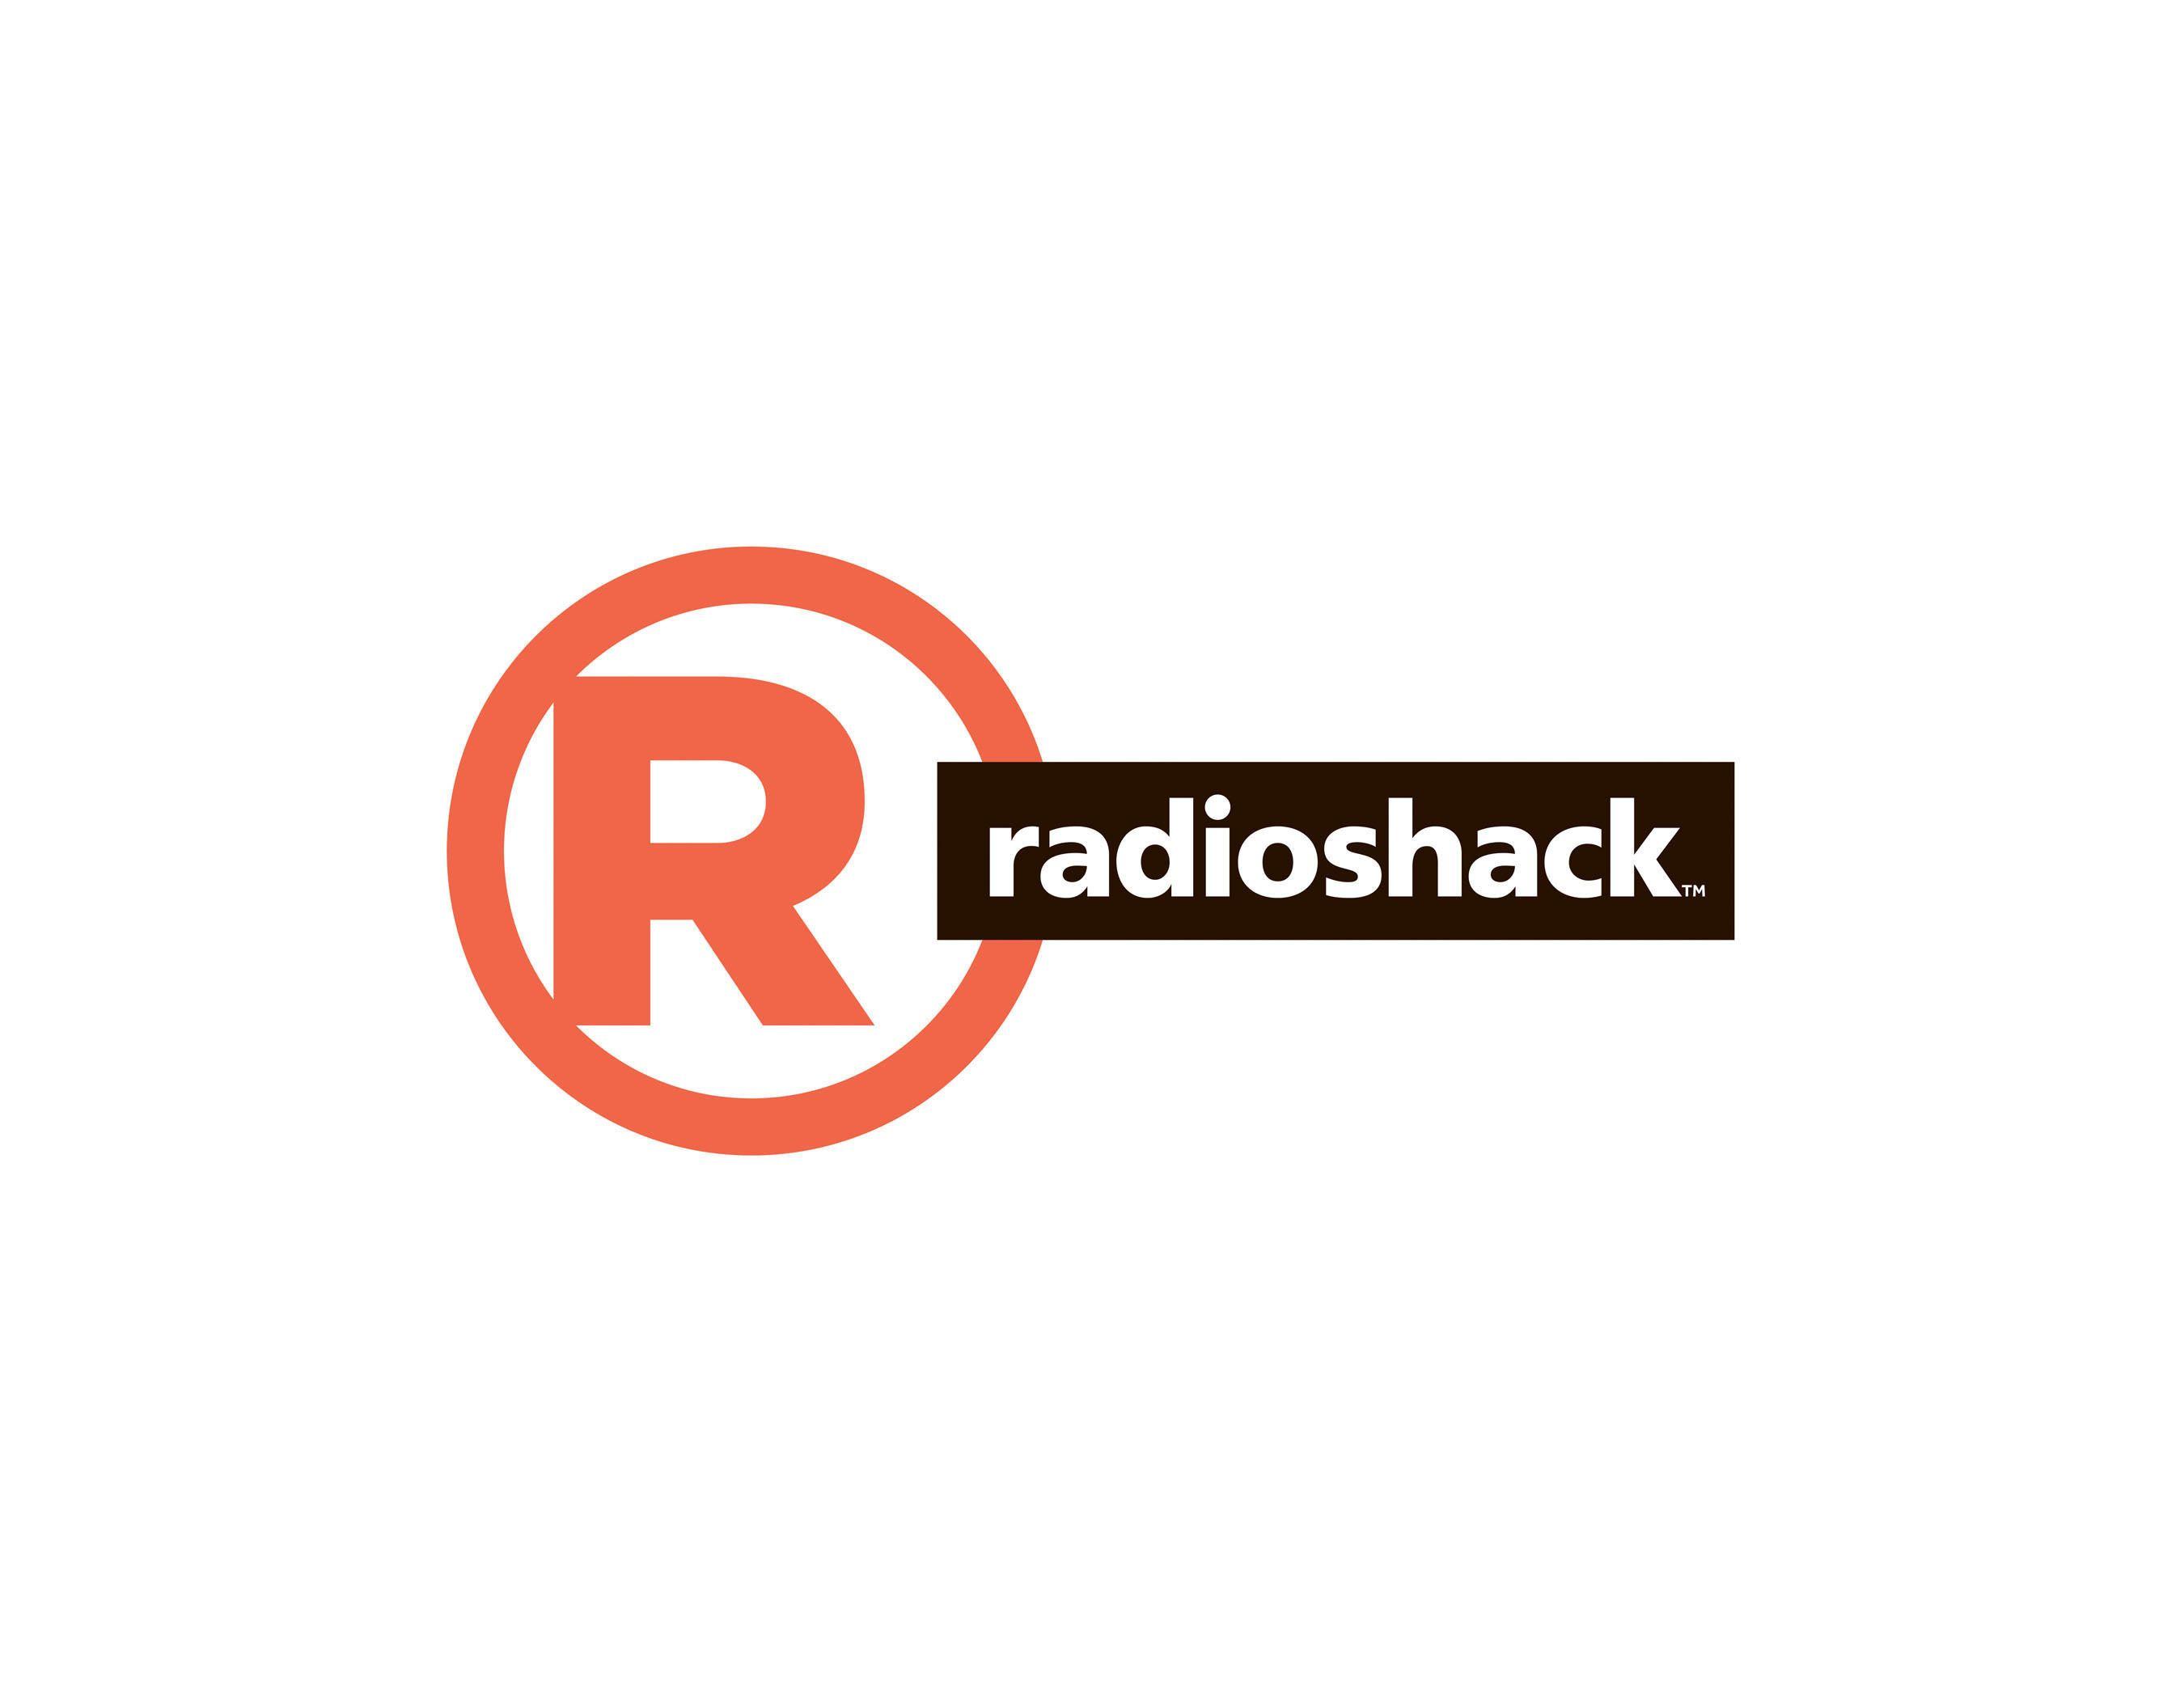 Radio Shack Logo - RadioShack's Fix It Here! Mobile Device Repair Service Now Available